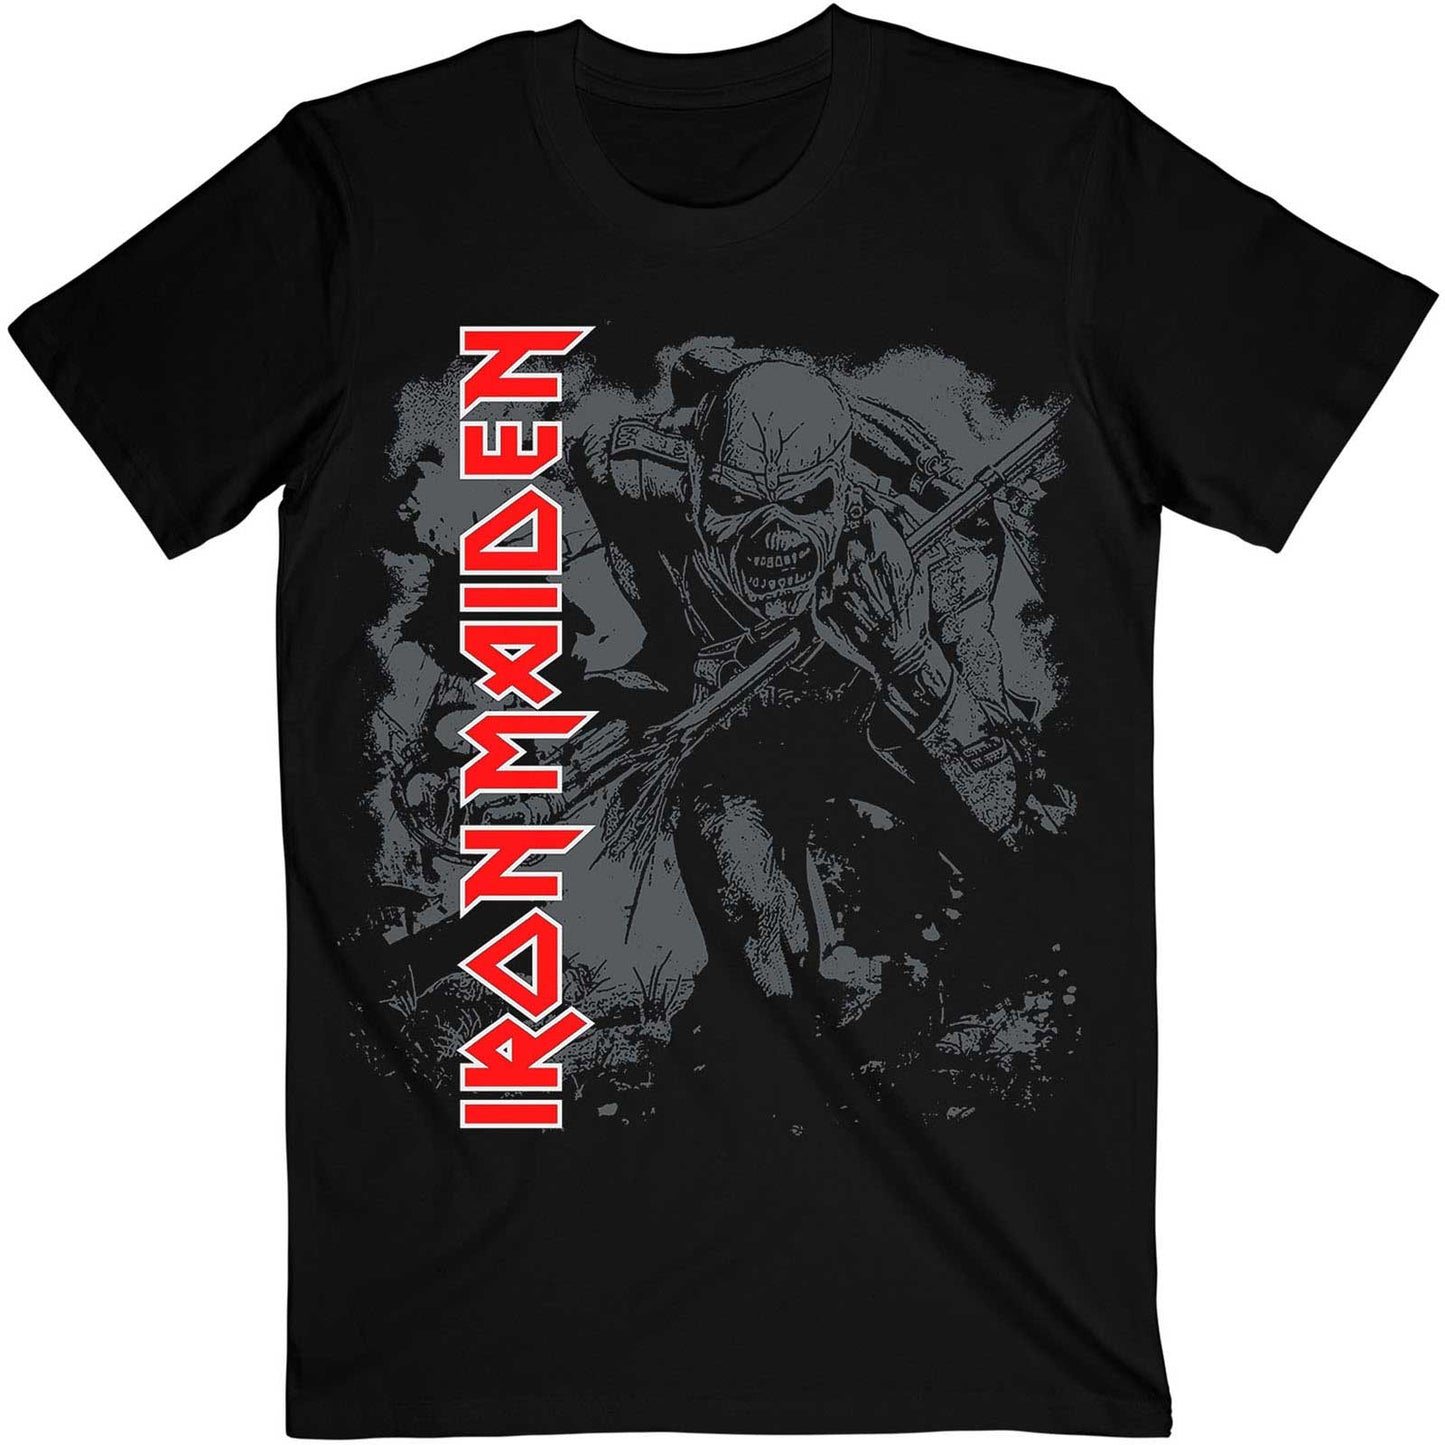 Iron Maiden T-Shirt: Hi-Contrast Trooper